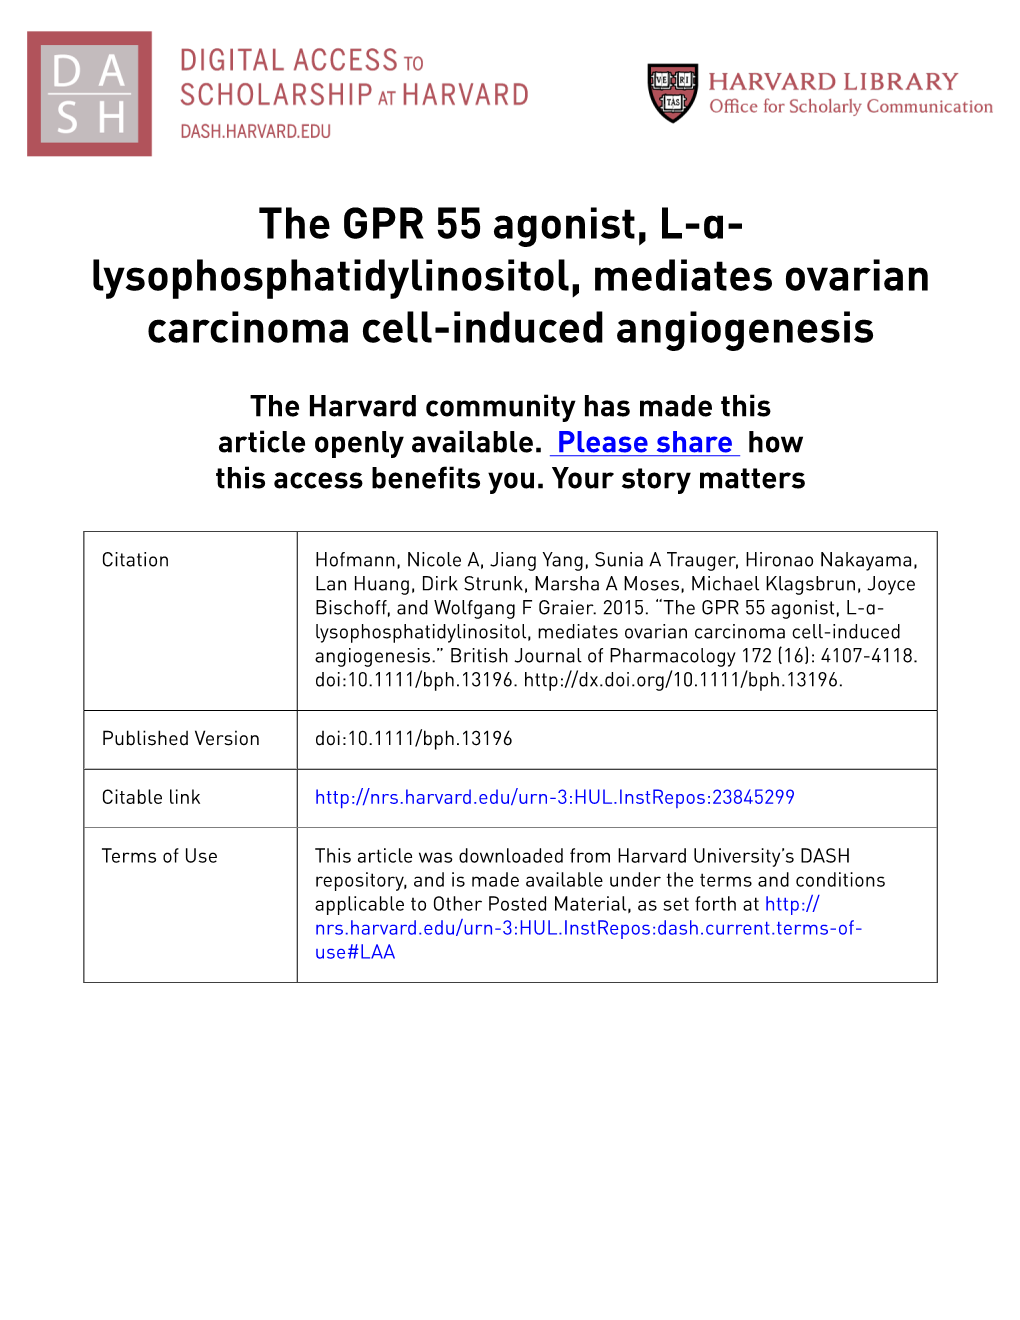 The GPR 55 Agonist, L-Α- Lysophosphatidylinositol, Mediates Ovarian Carcinoma Cell-Induced Angiogenesis